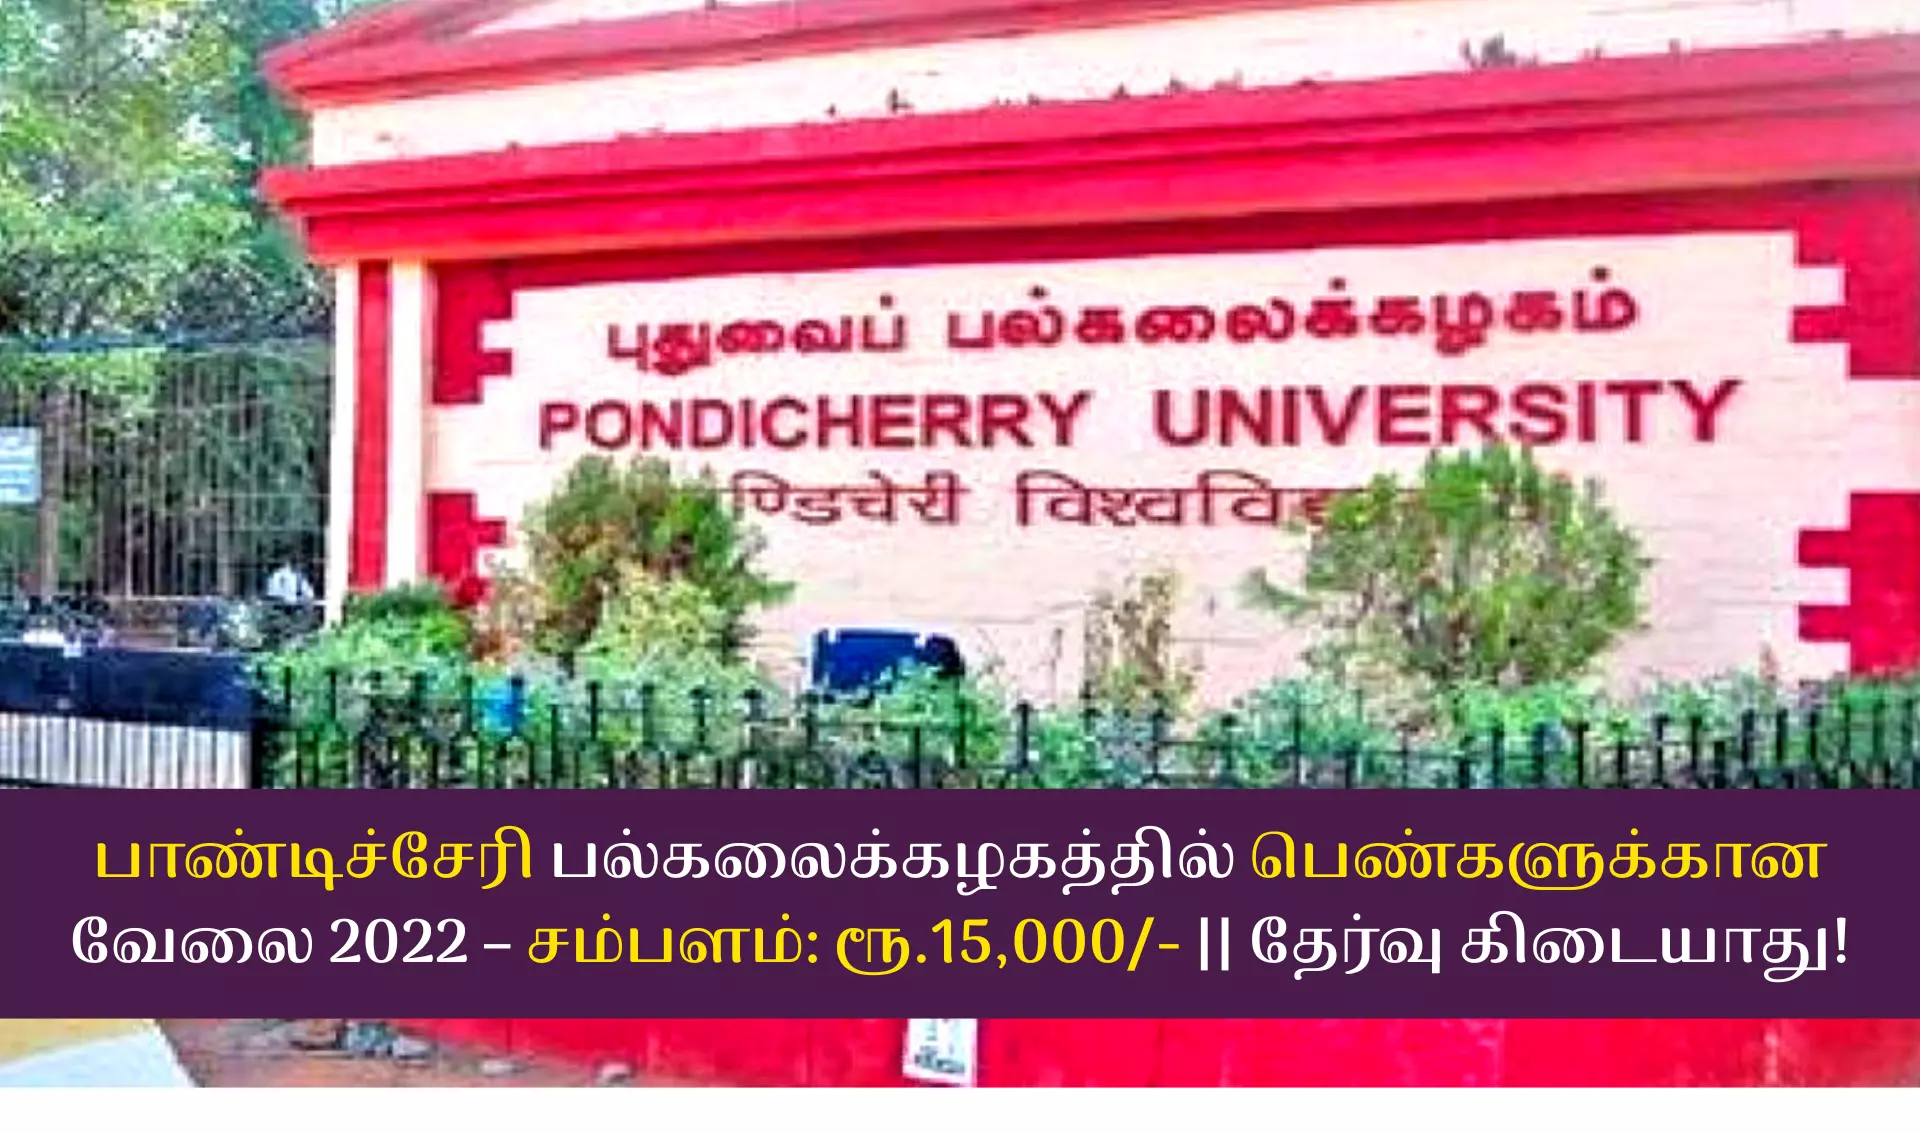 pondicherry university recruitment 2022 research staff field investigator Pdf